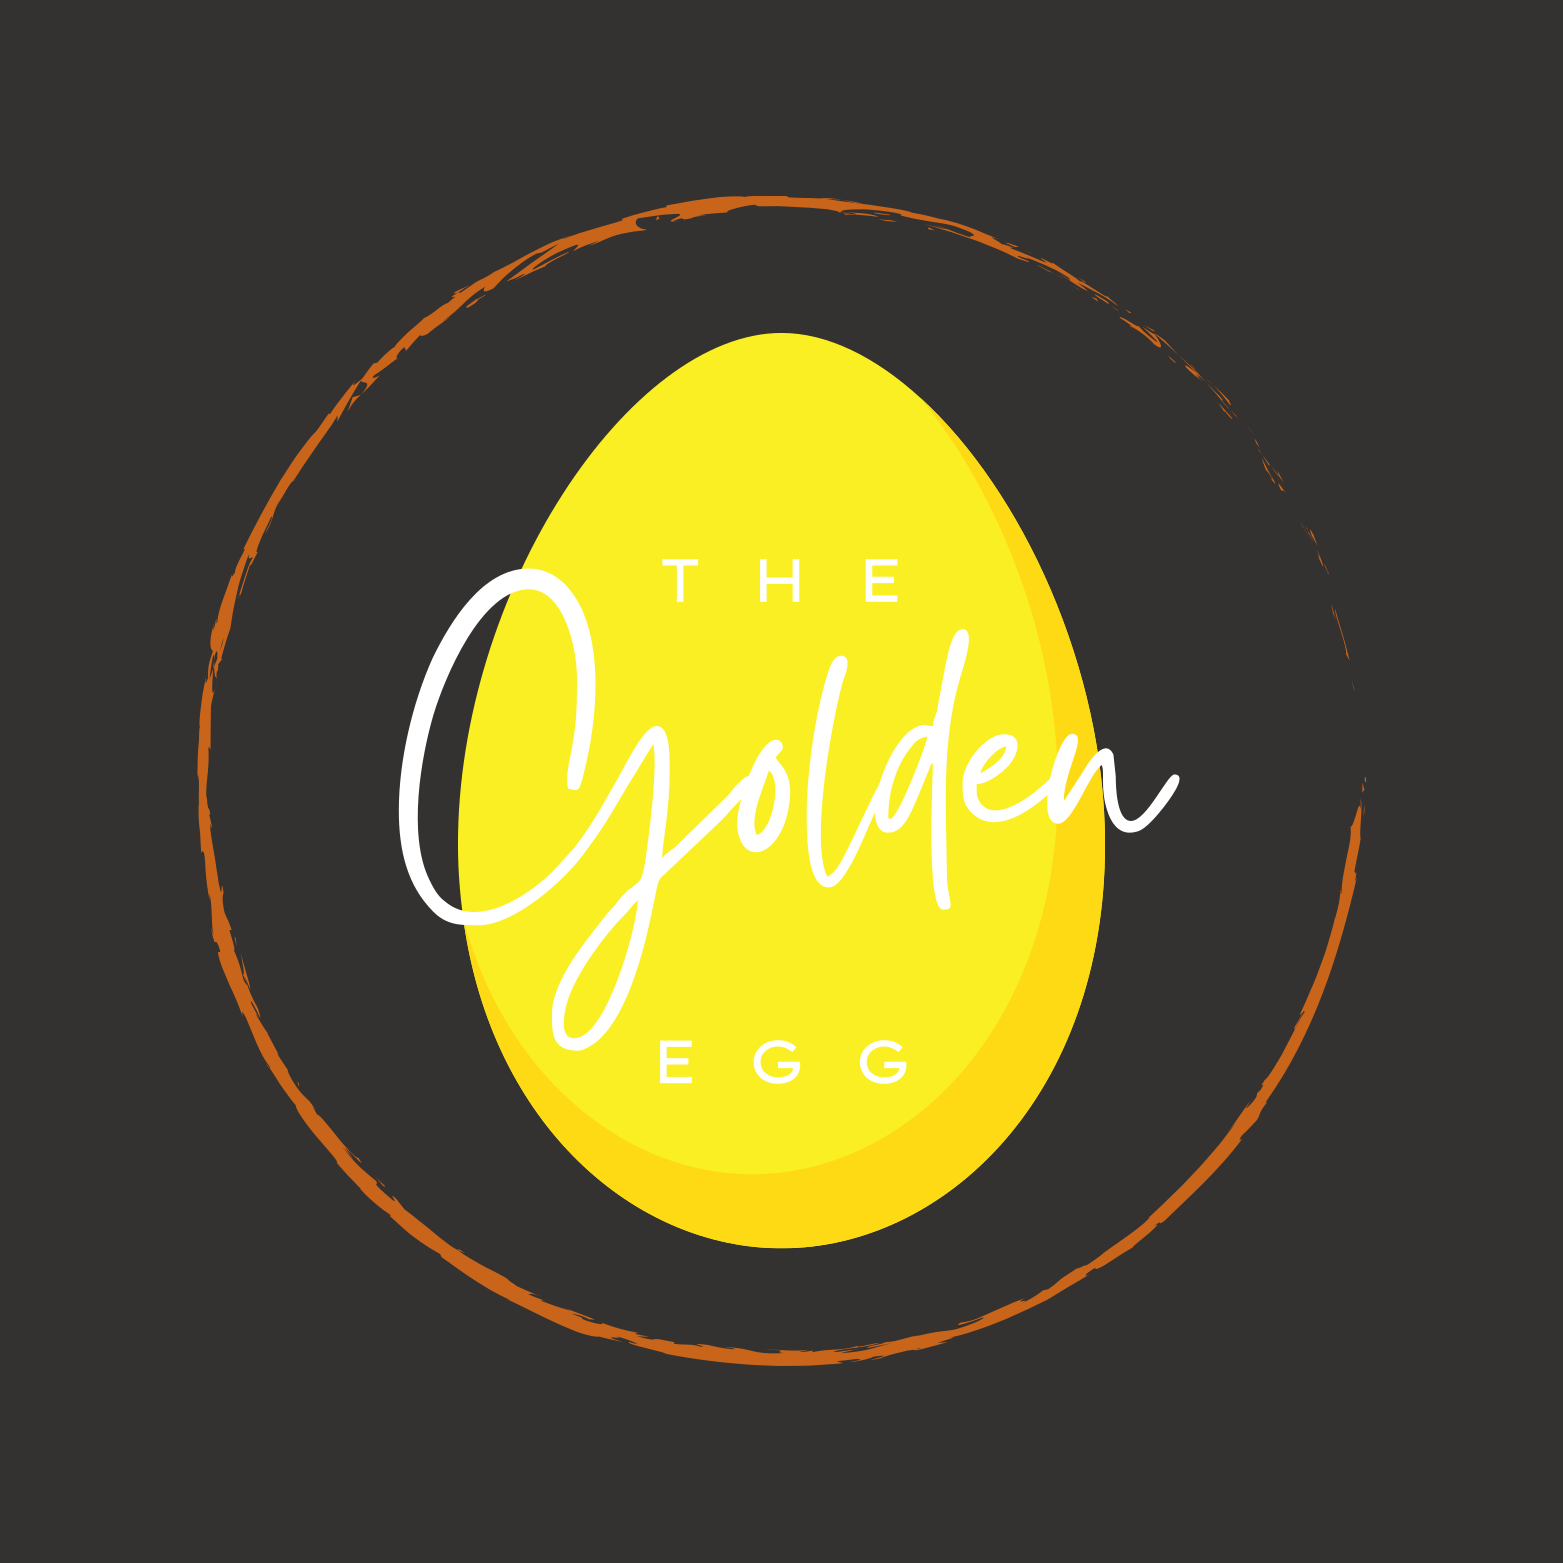 The Golden Egg Rust Plugin - Lone Design